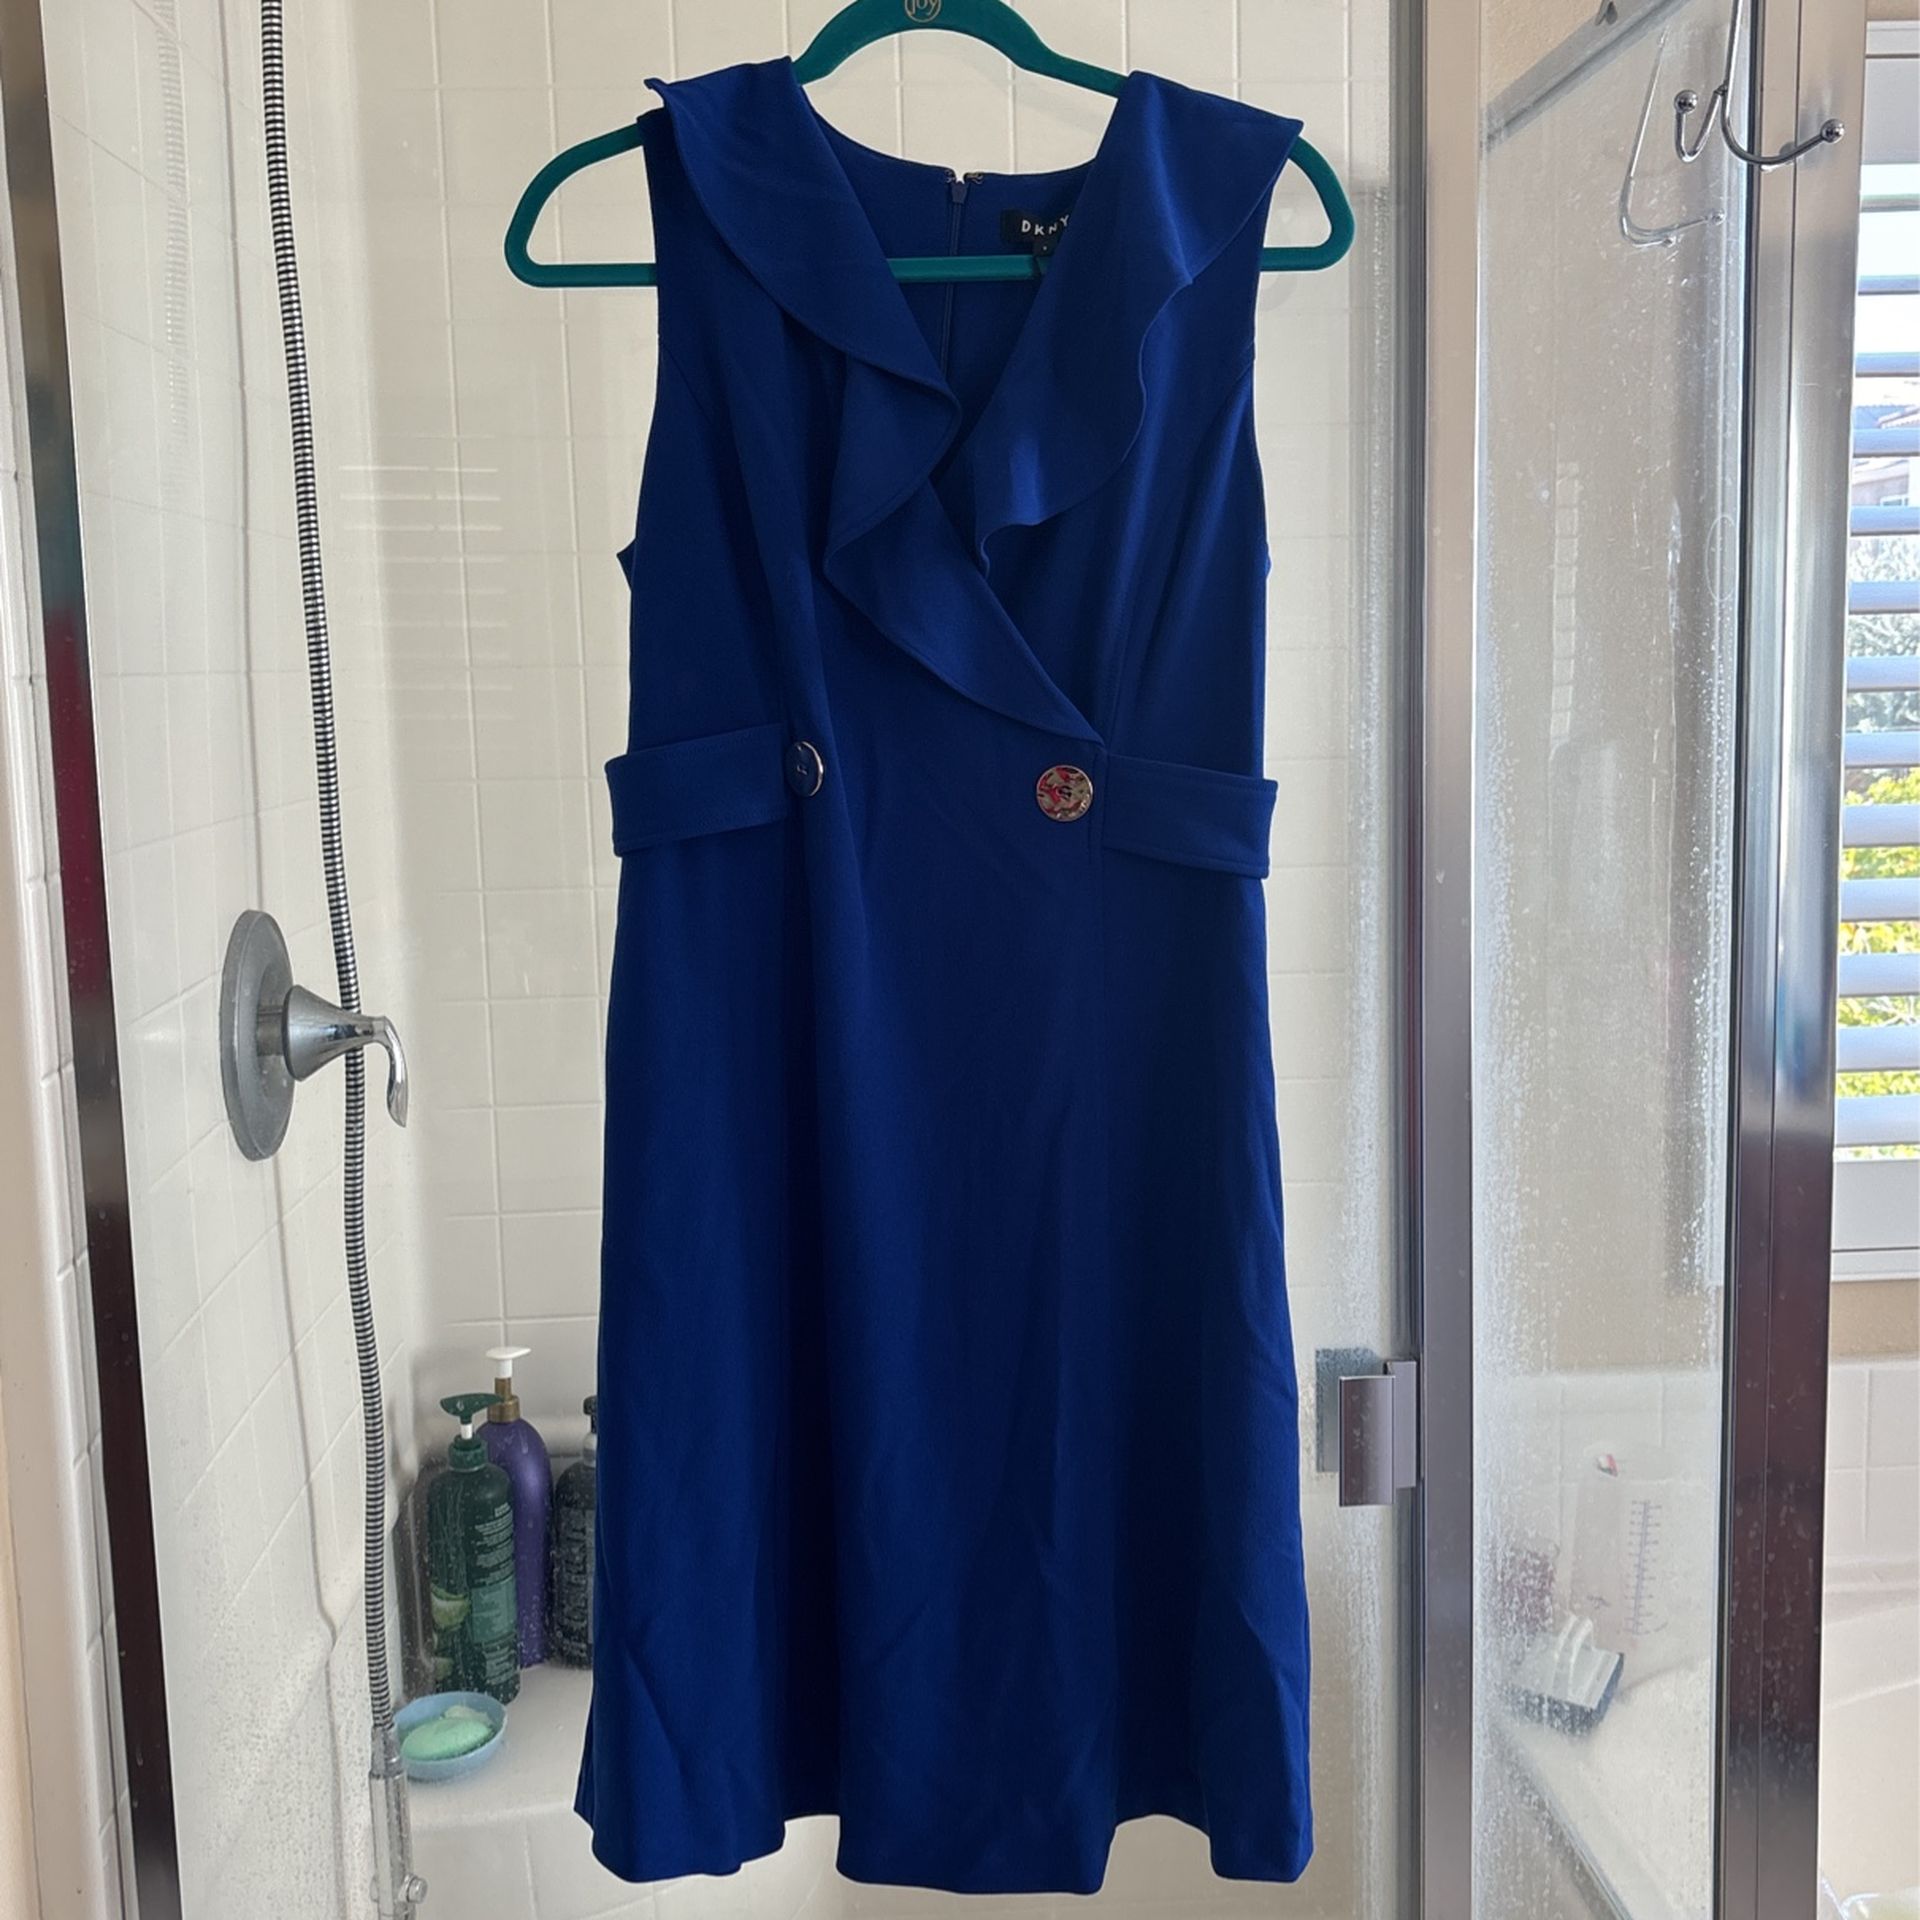 Dkny Royal Blue Dress Sz 8- Brand New With Tags- $15